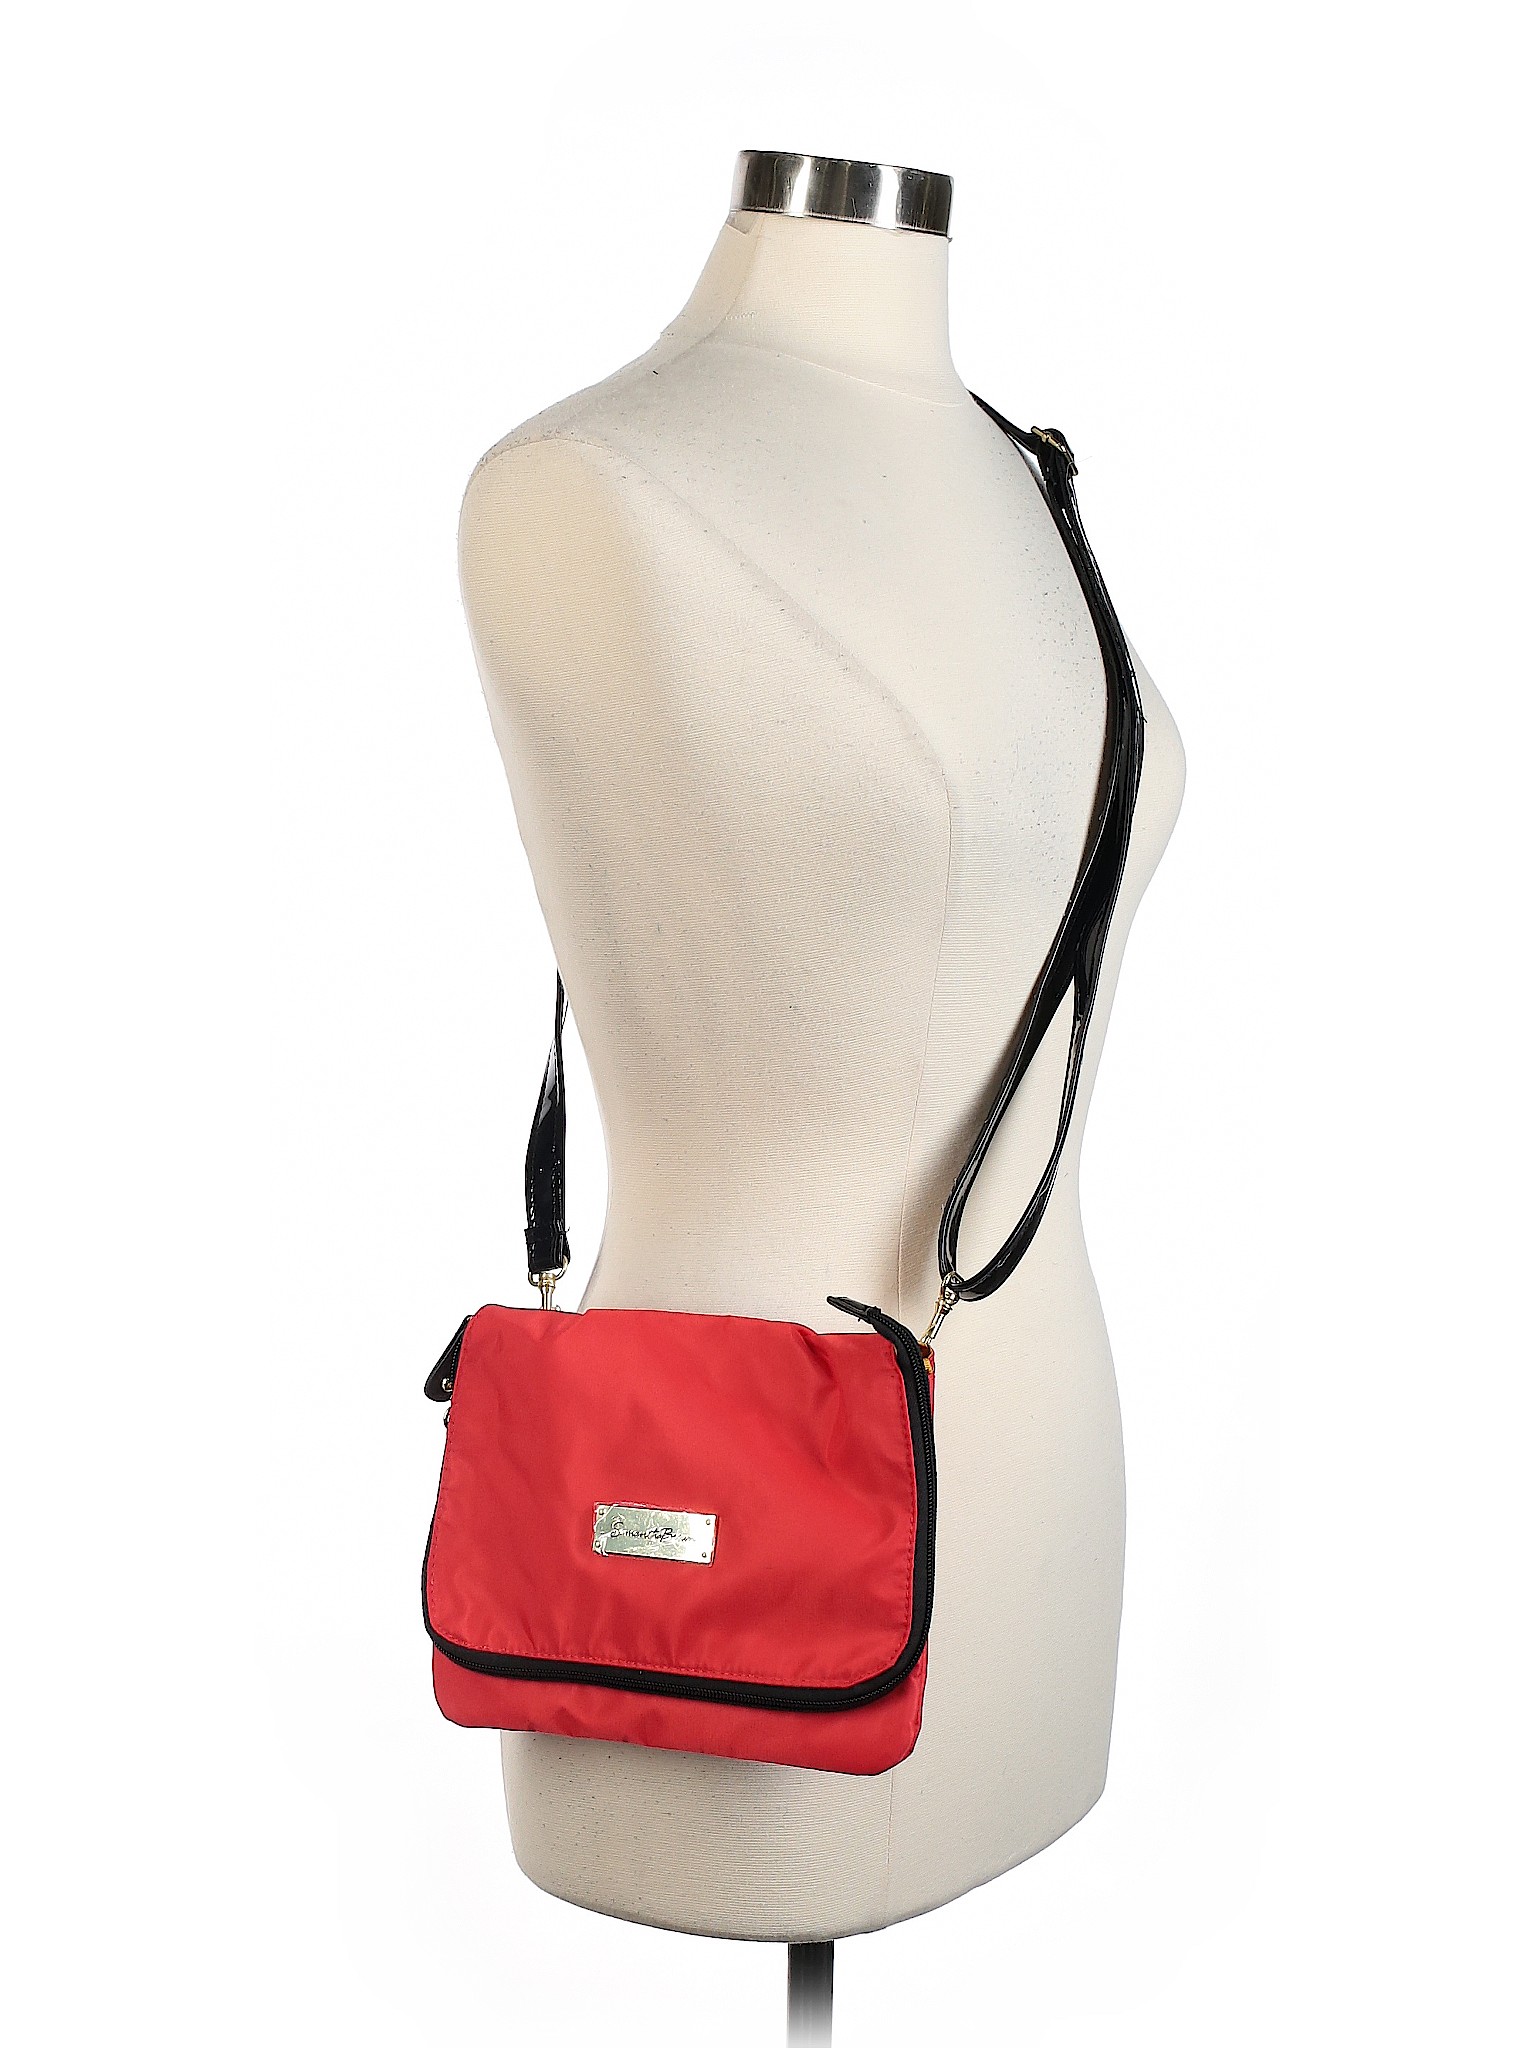 Samantha Brown Women Red Crossbody Bag One Size | eBay